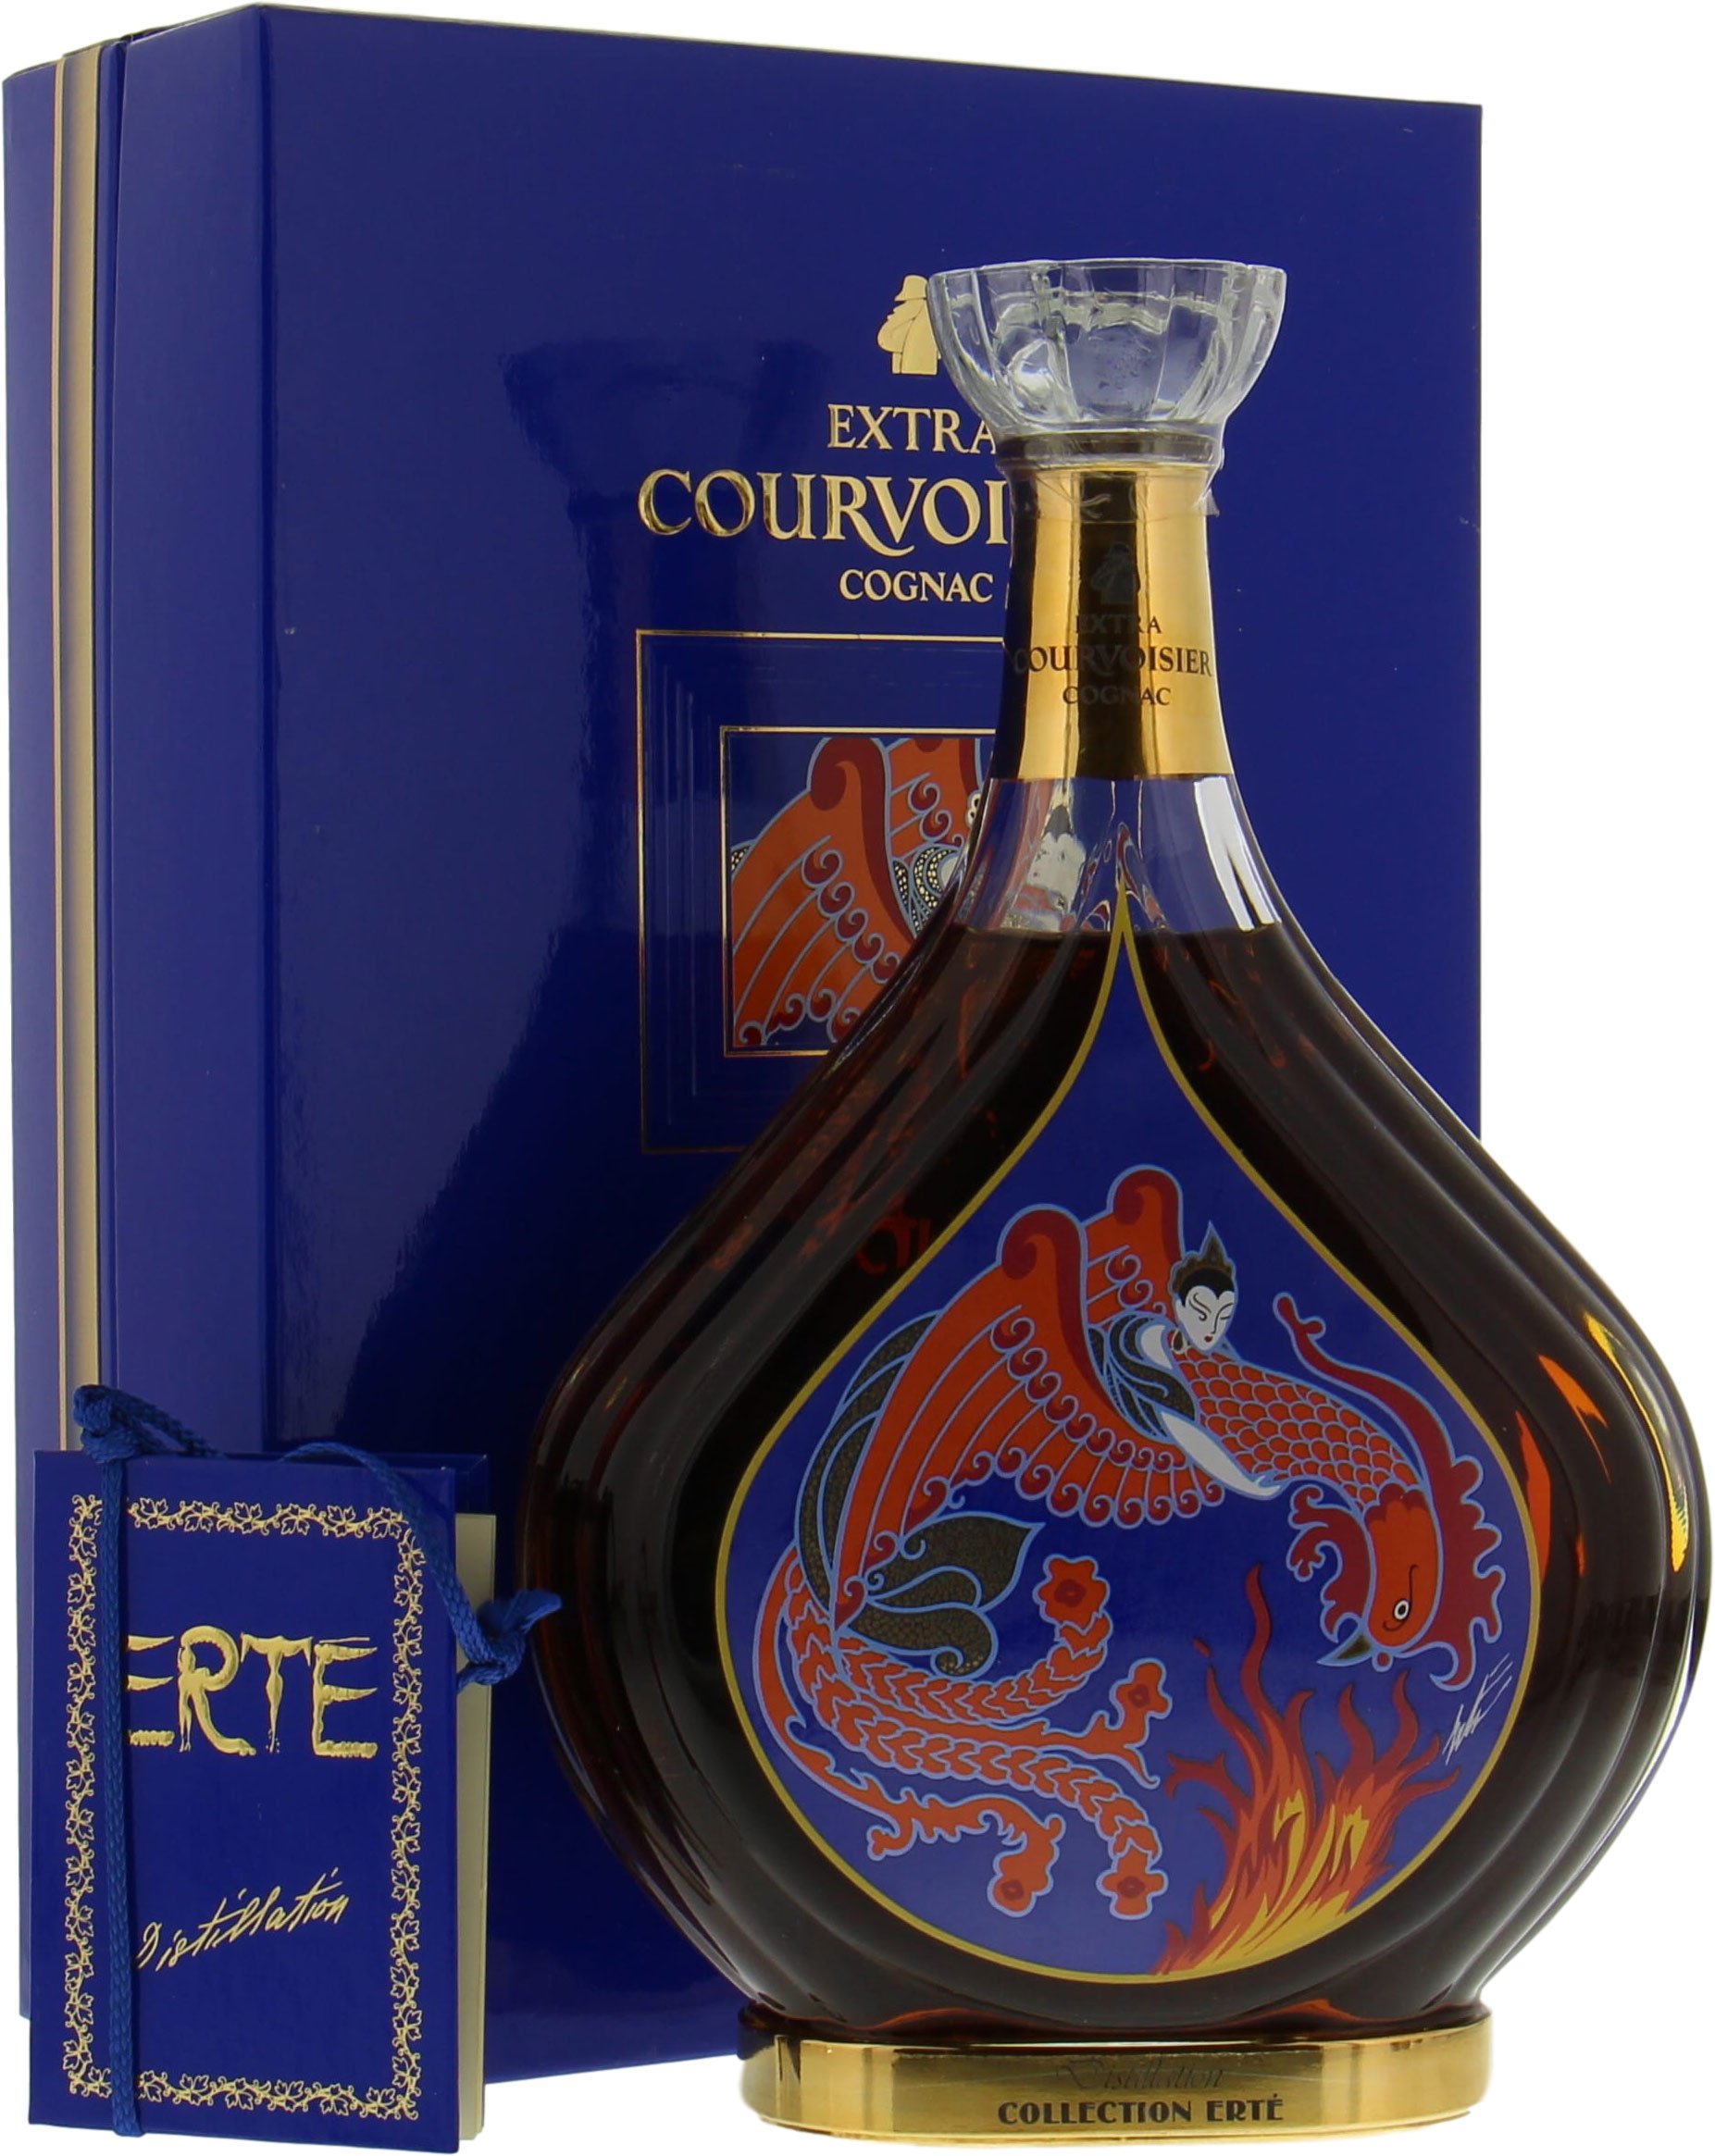 Courvoisier Cognac - Erte no 3 NV From Original Wooden Case